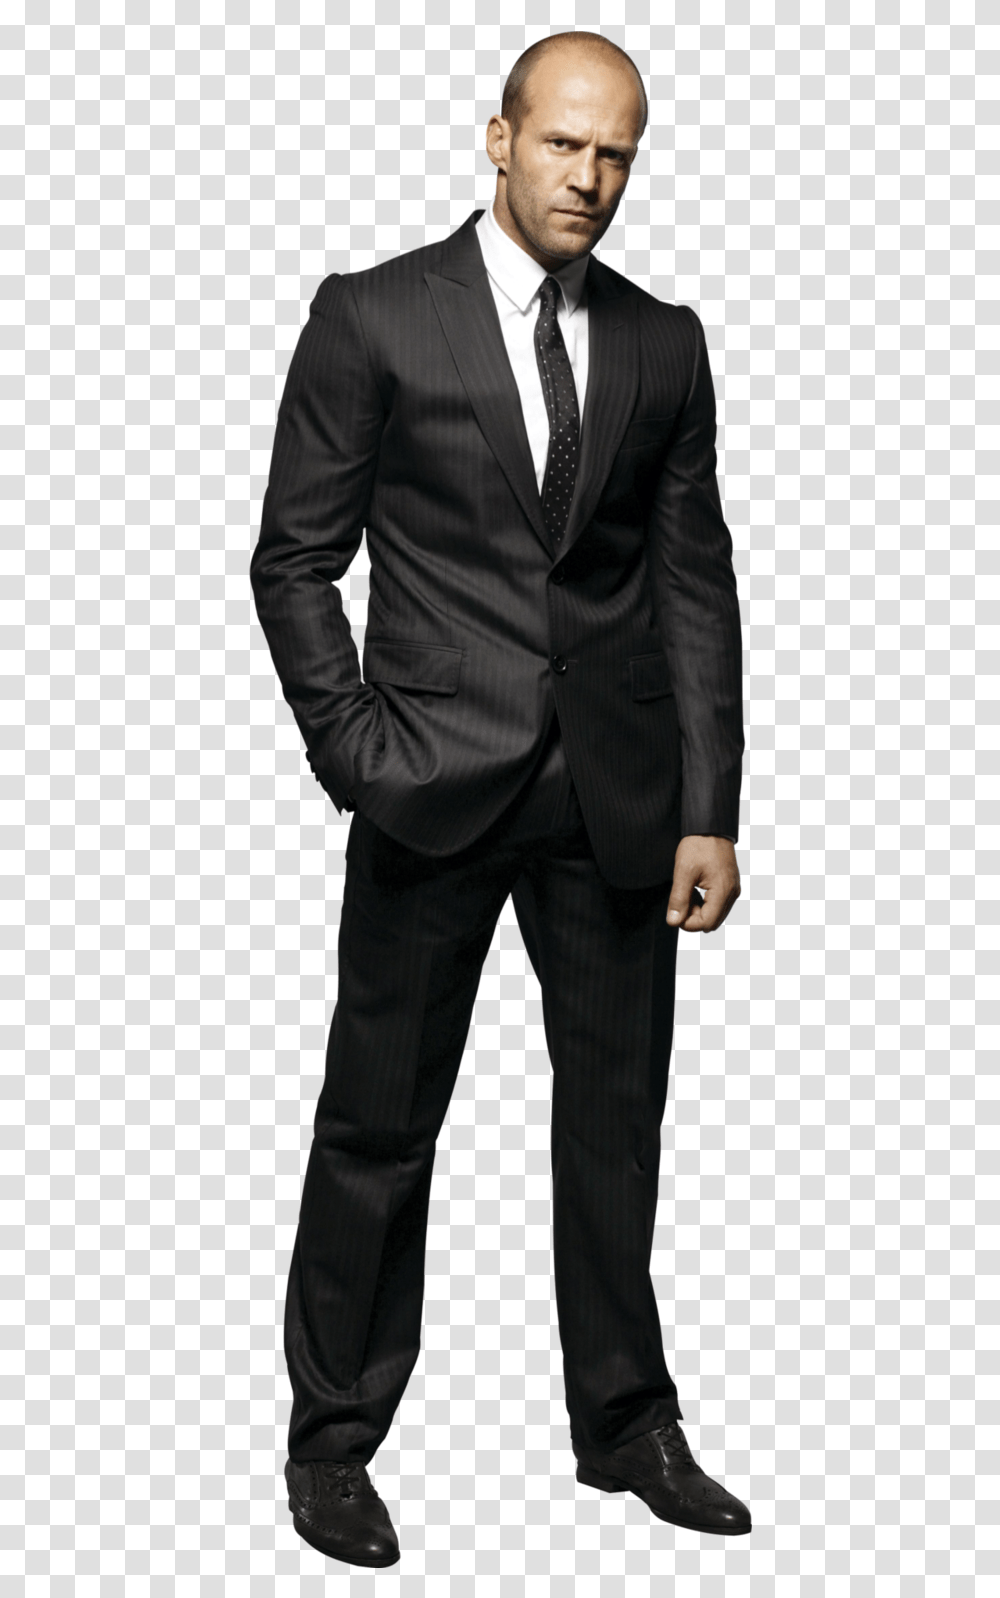 Jason Statham Full Body, Suit, Overcoat, Tie Transparent Png